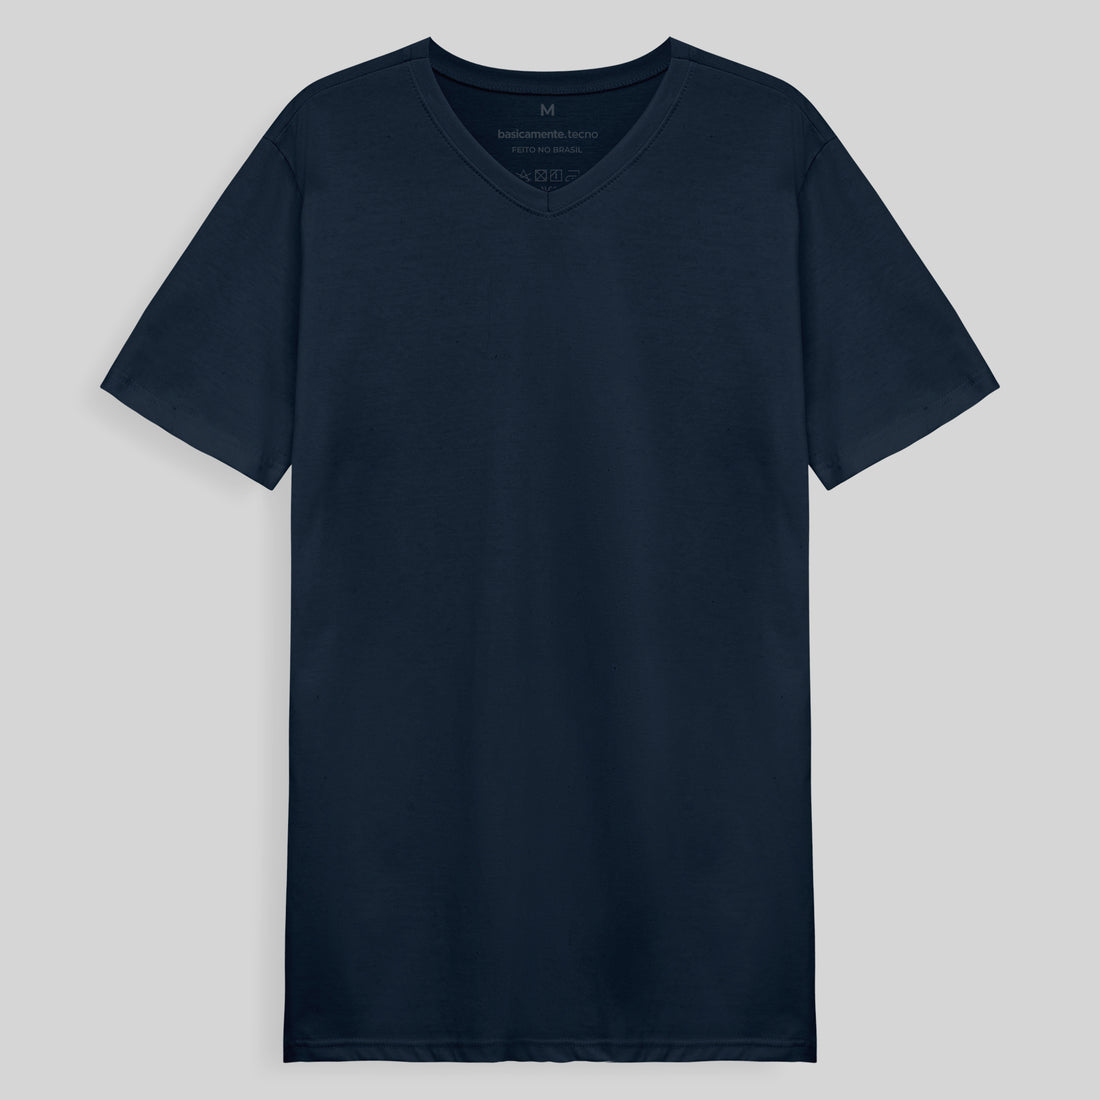 Tech T-Shirt Impermeável Gola V Masculina - Azul Marinho